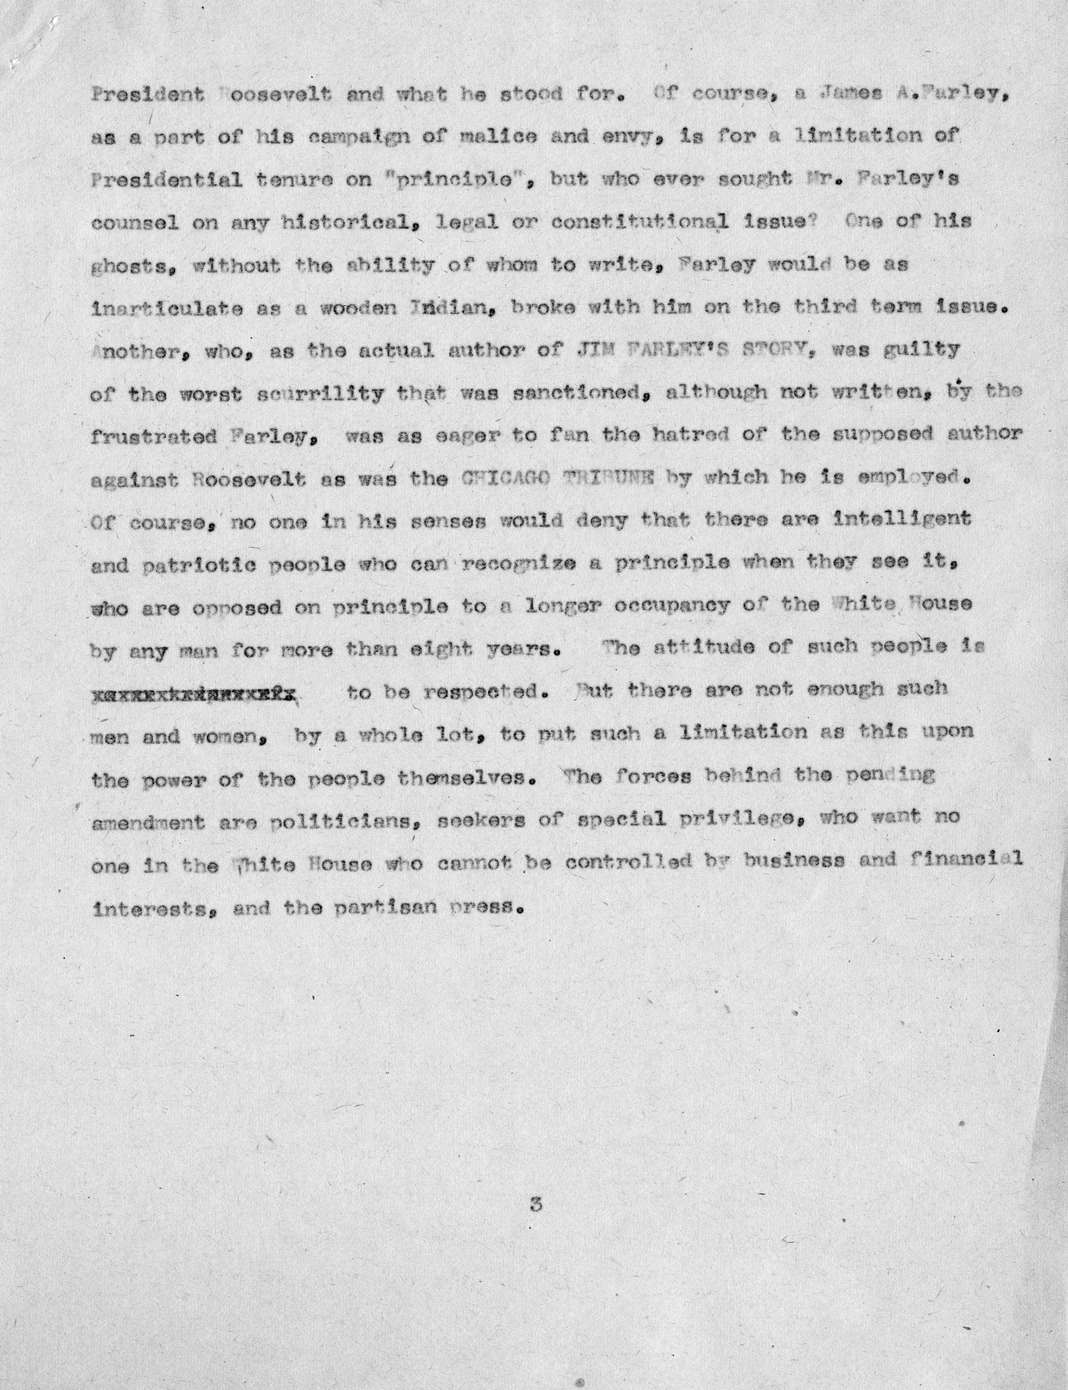 Draft of Newspaper Column by Harold Ickes, Presidential Tenure Amendment